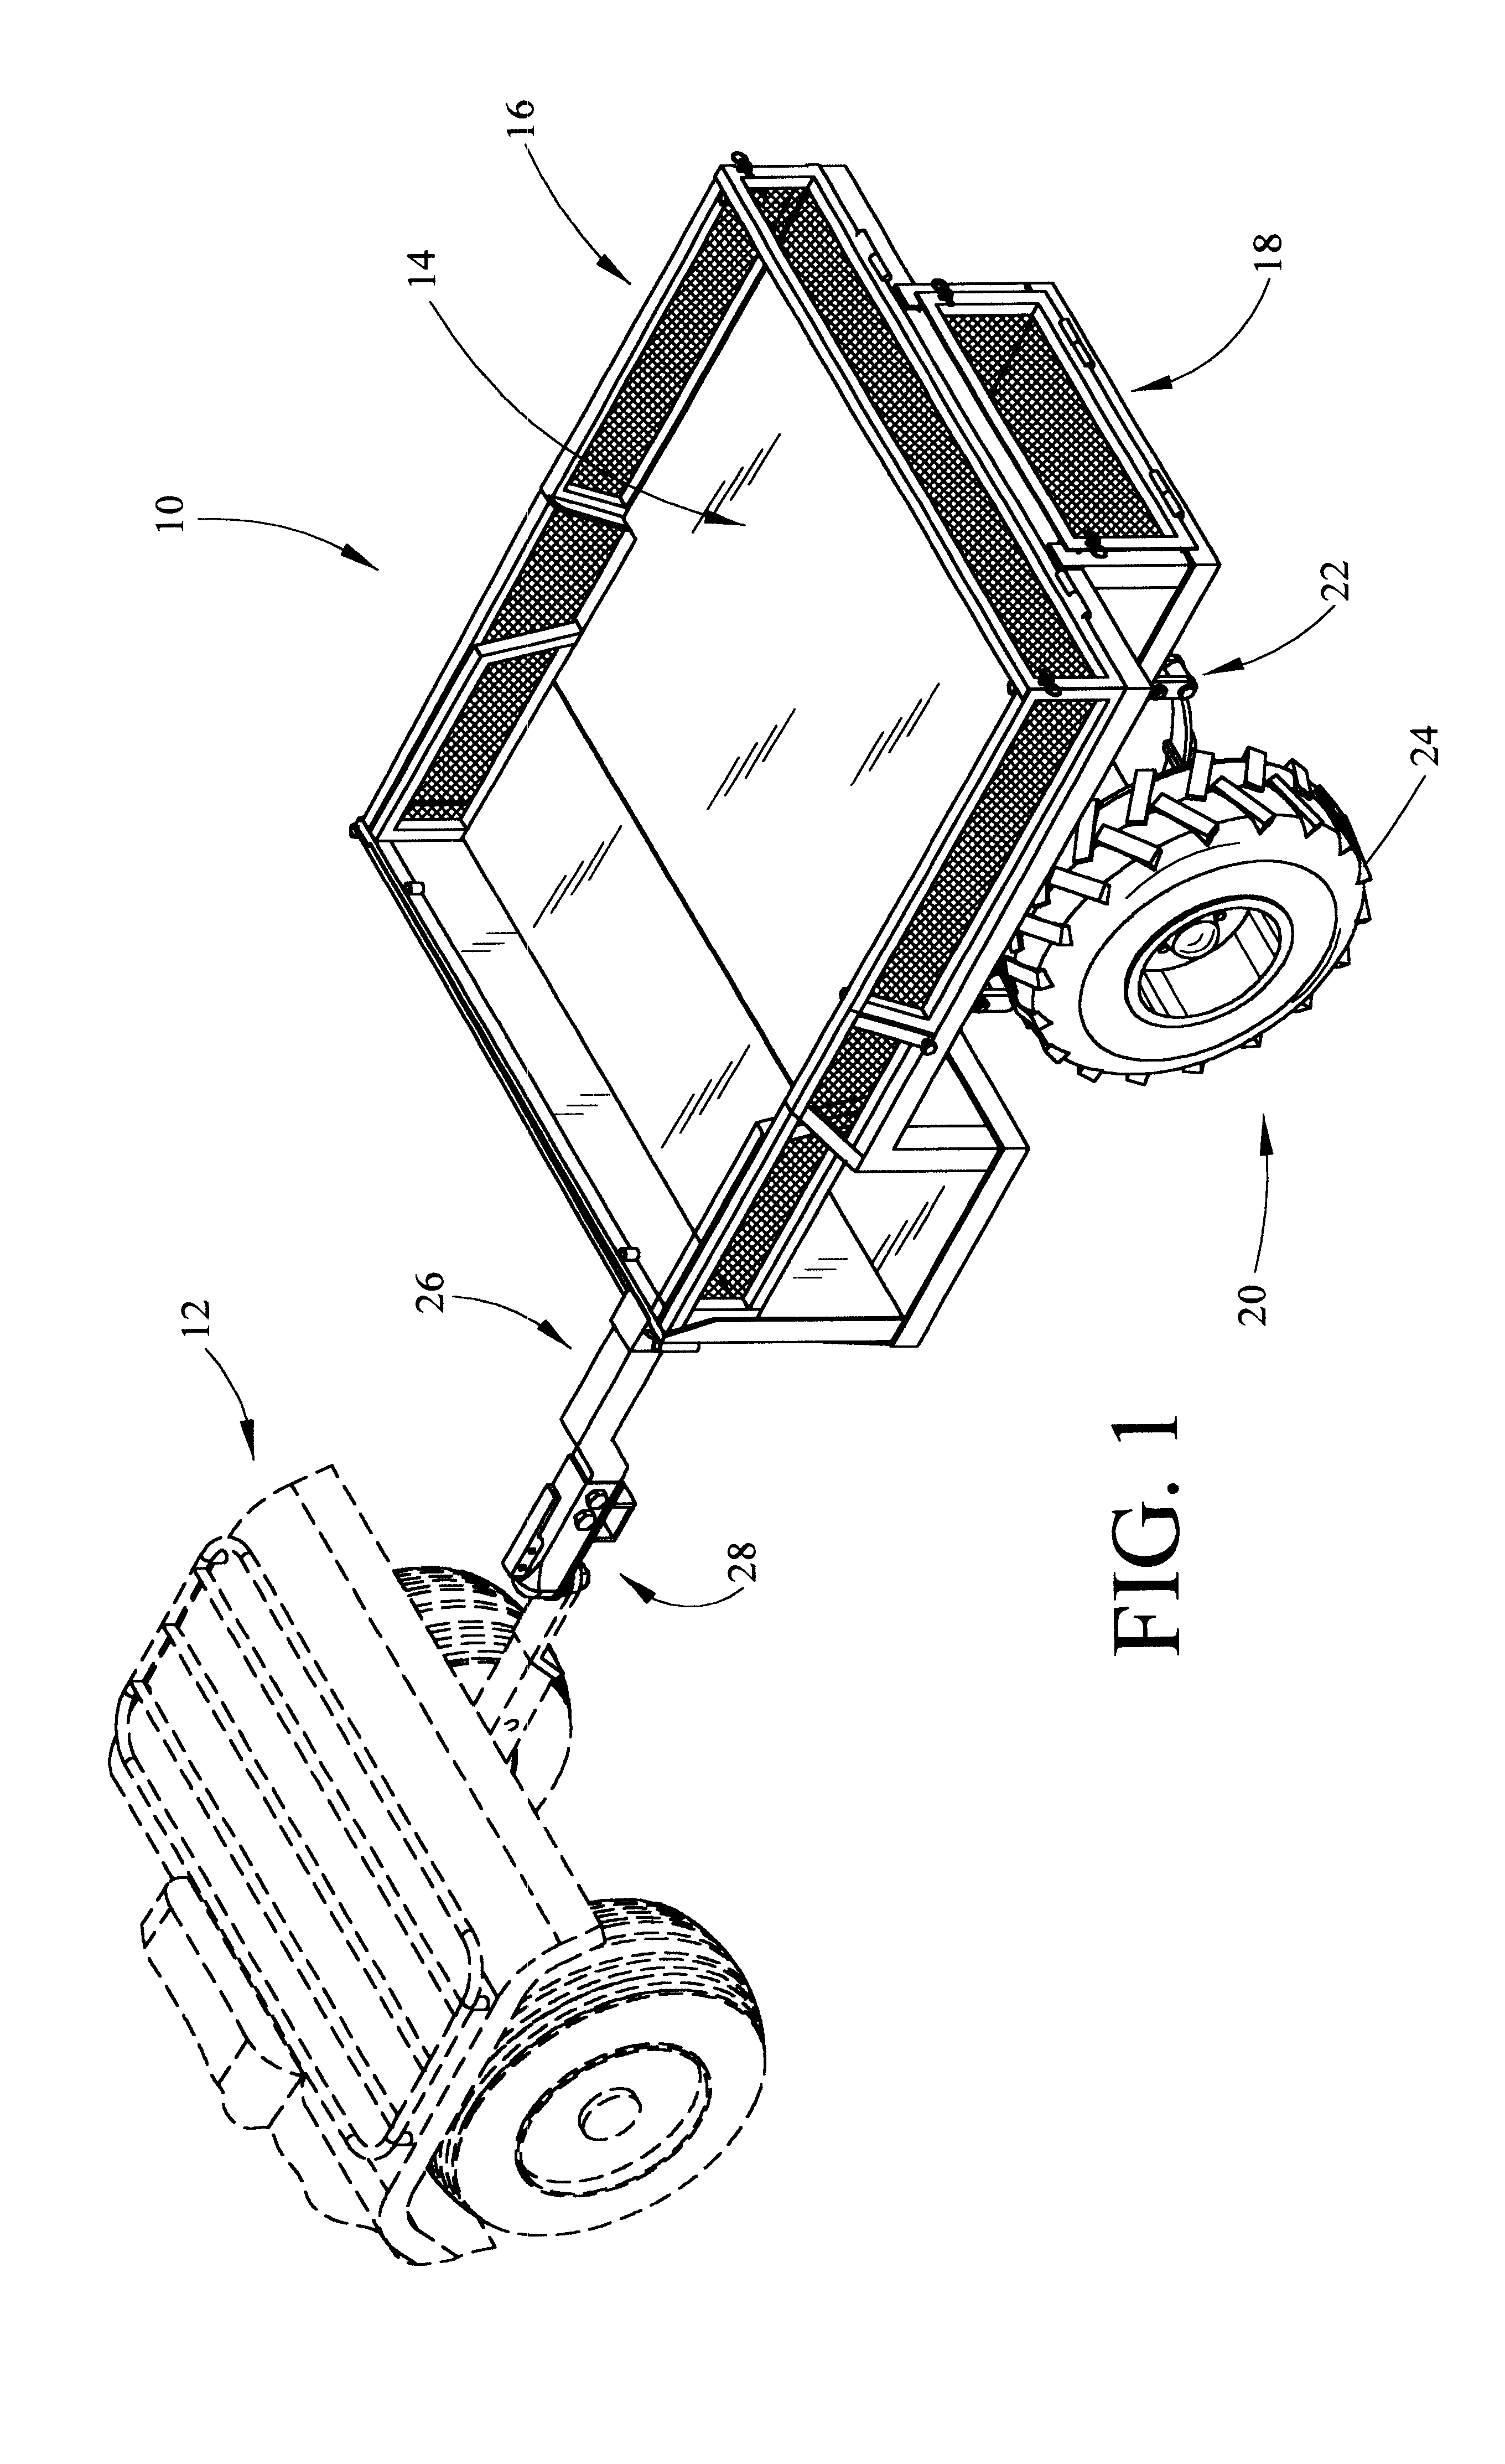 ATV trailer apparatus